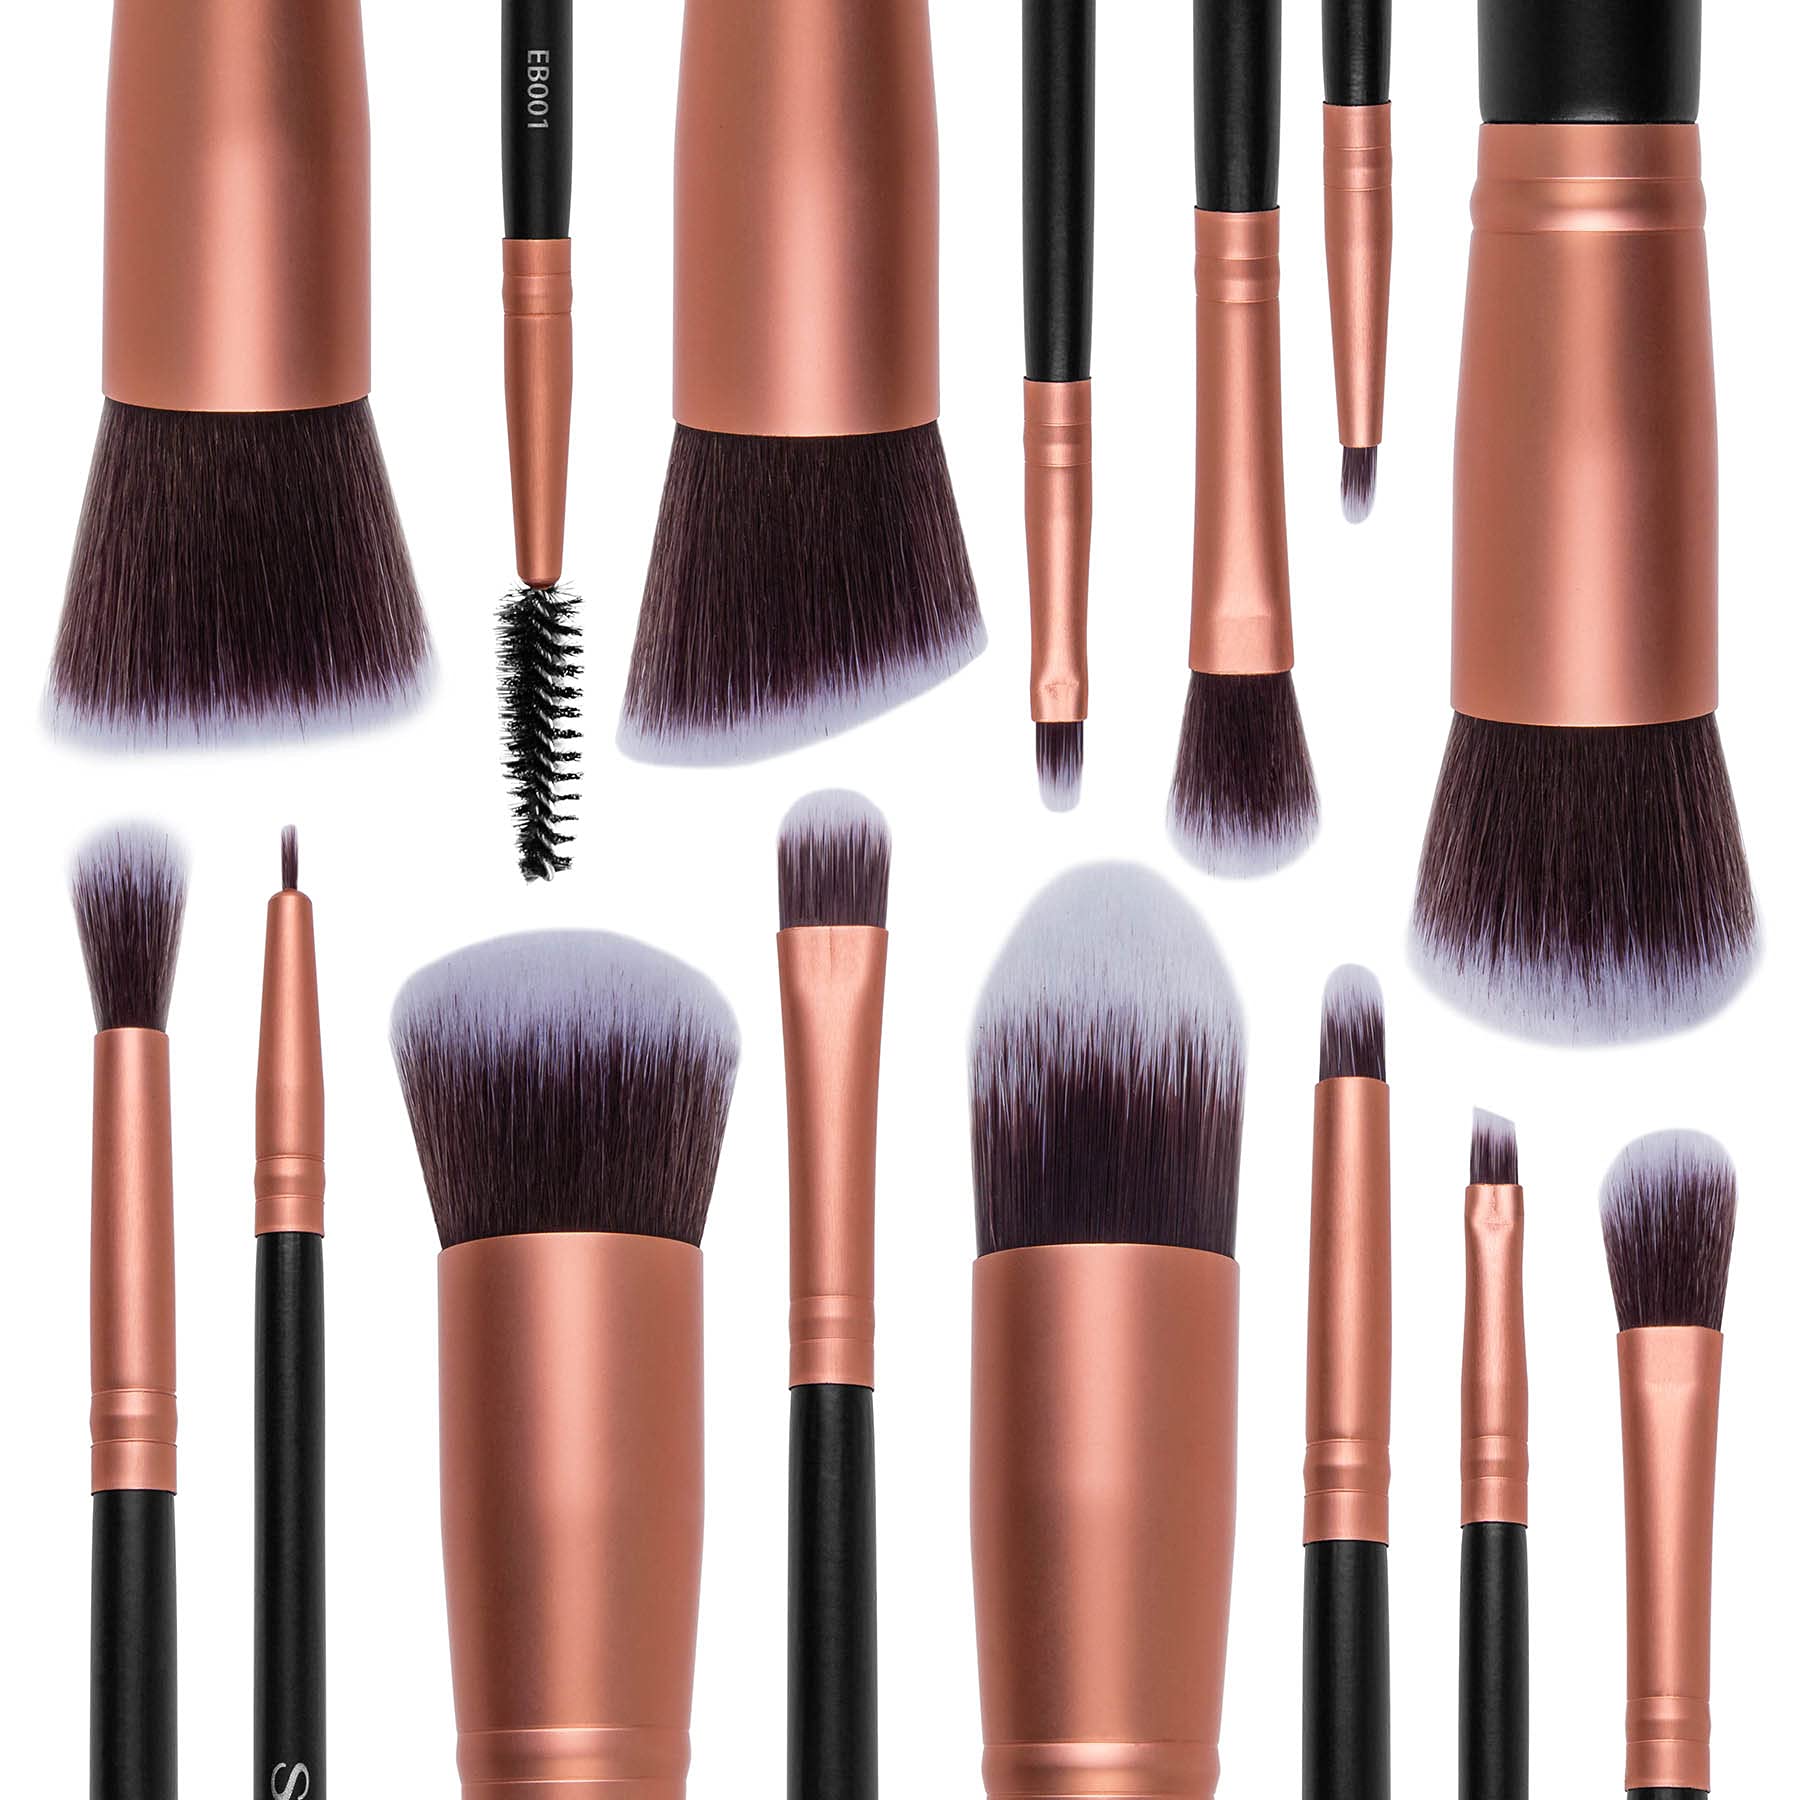 SHANY Rose All Day 14-Piece Brush Set – Elite Cosmetics Brush Collection - Complete Kabuki Makeup Brush Set in Rose Gold - 14 PCS